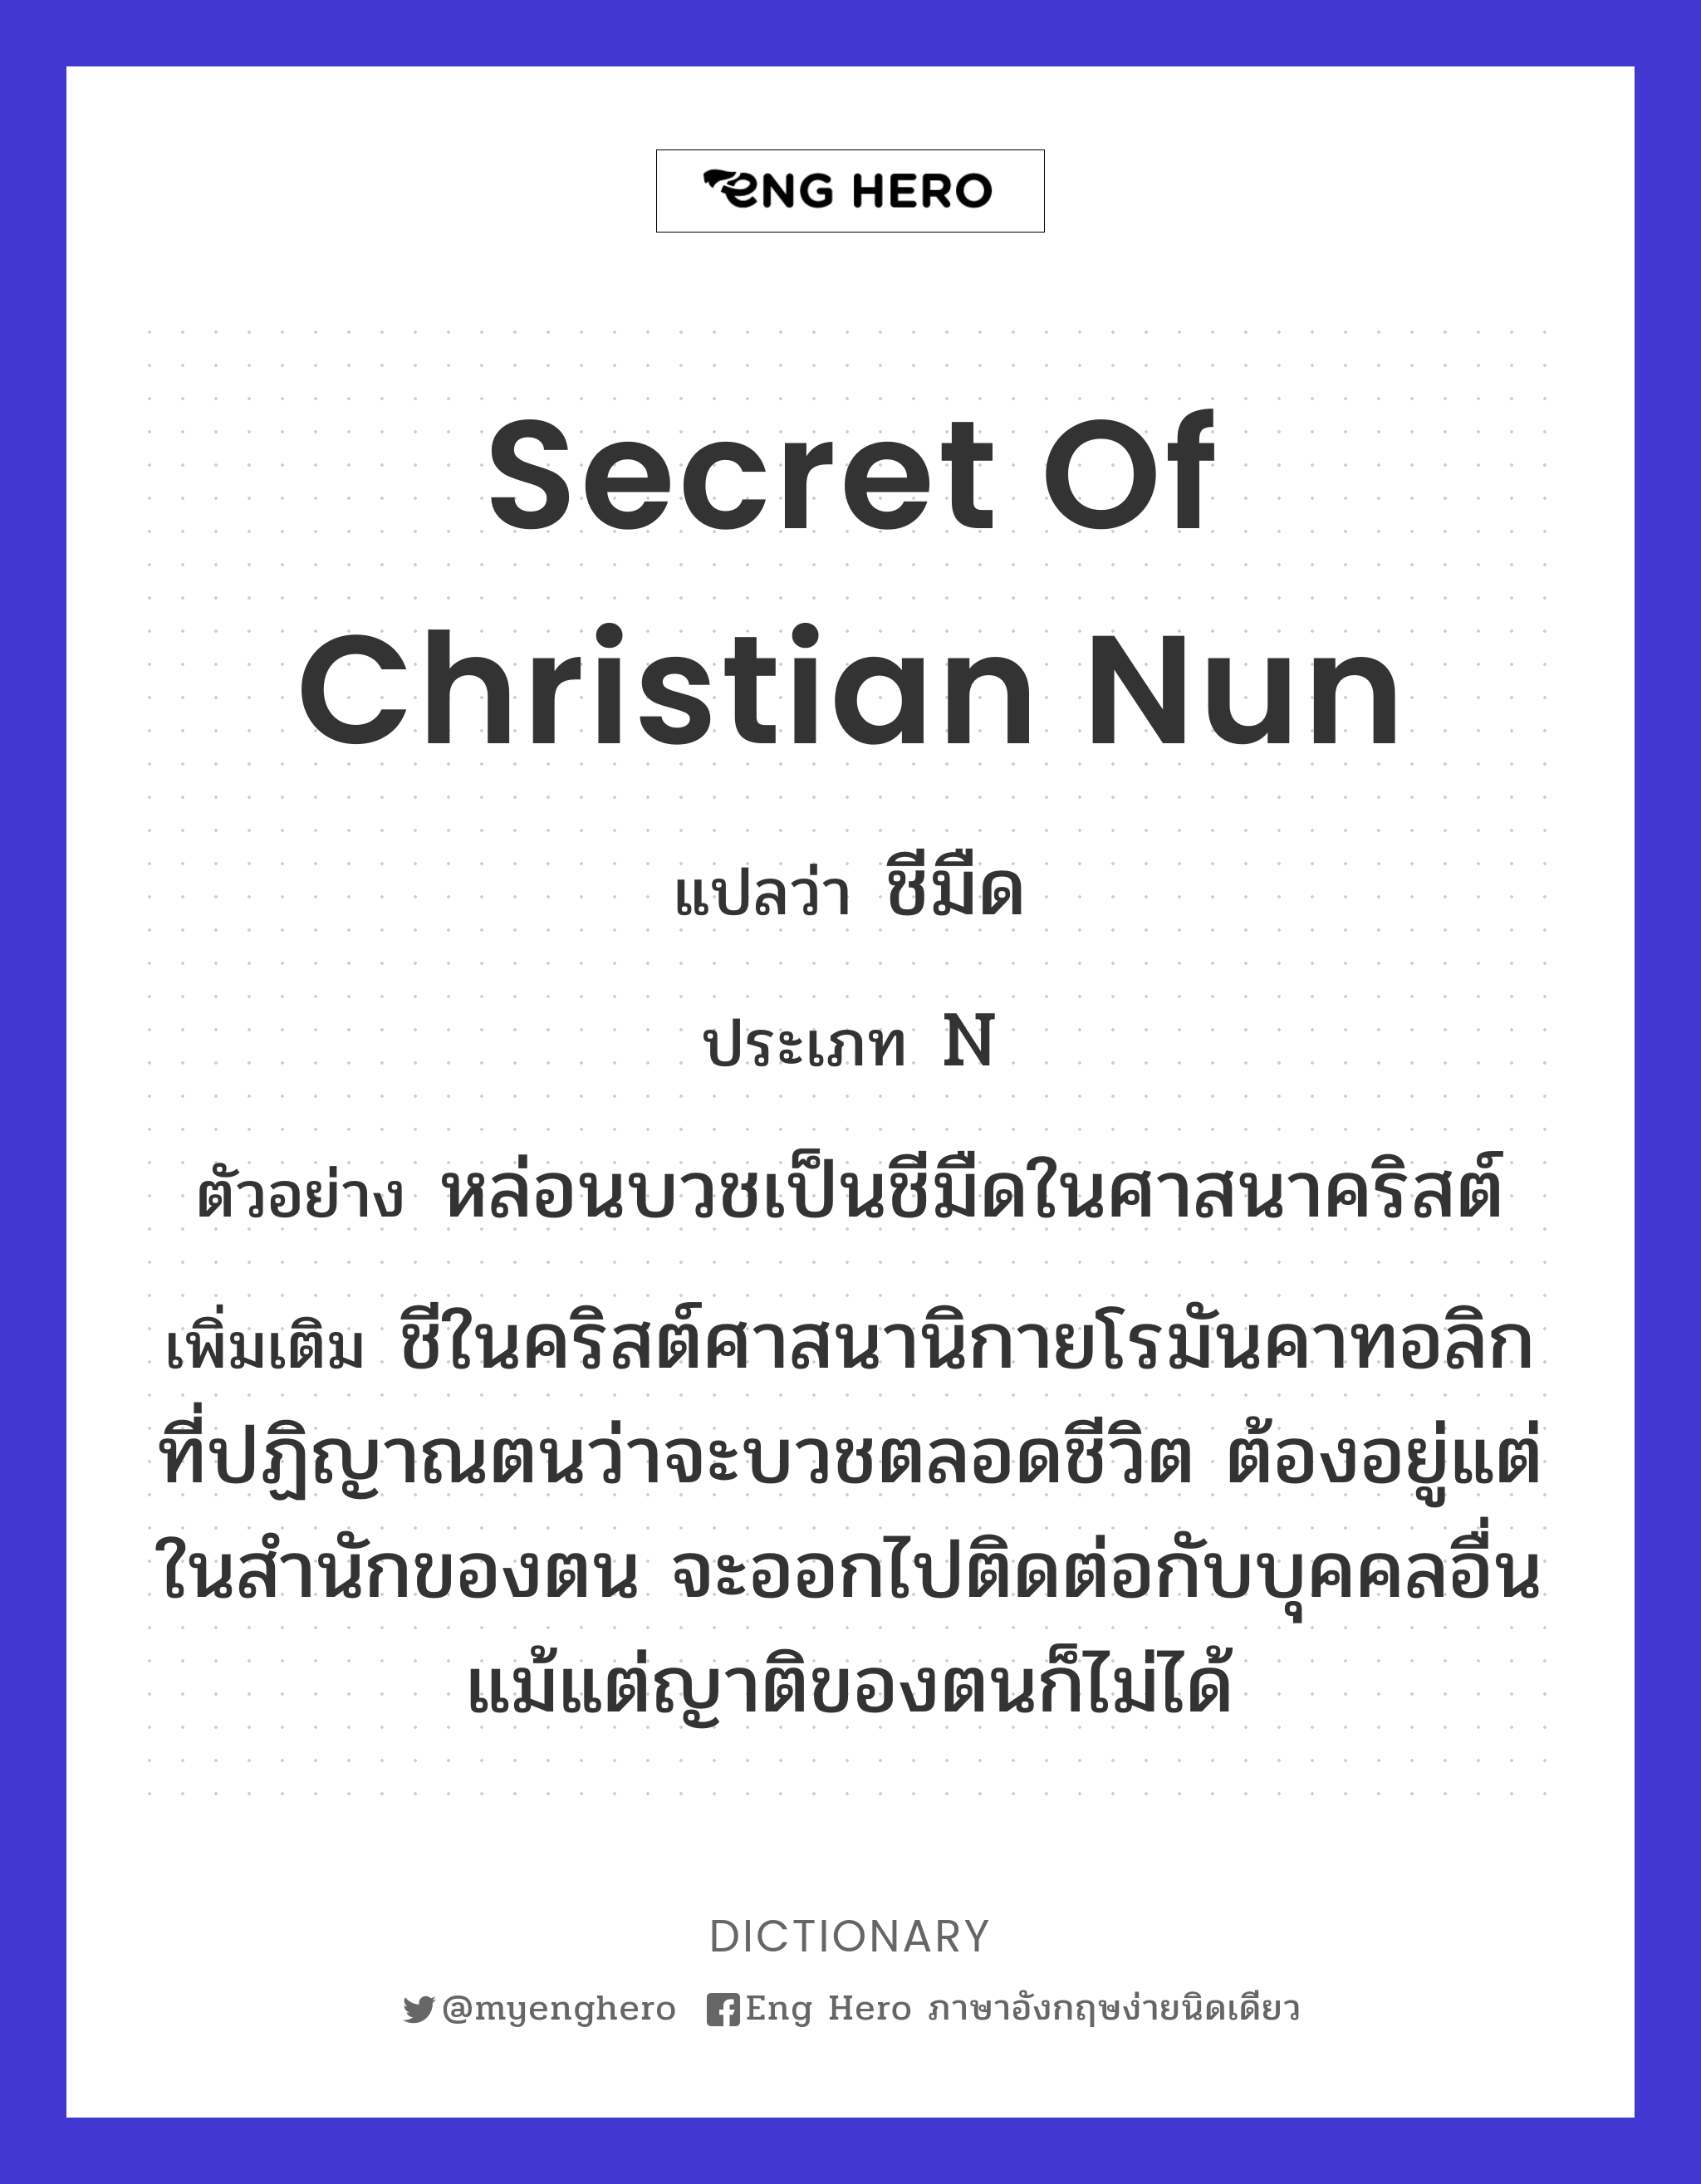 secret of Christian nun